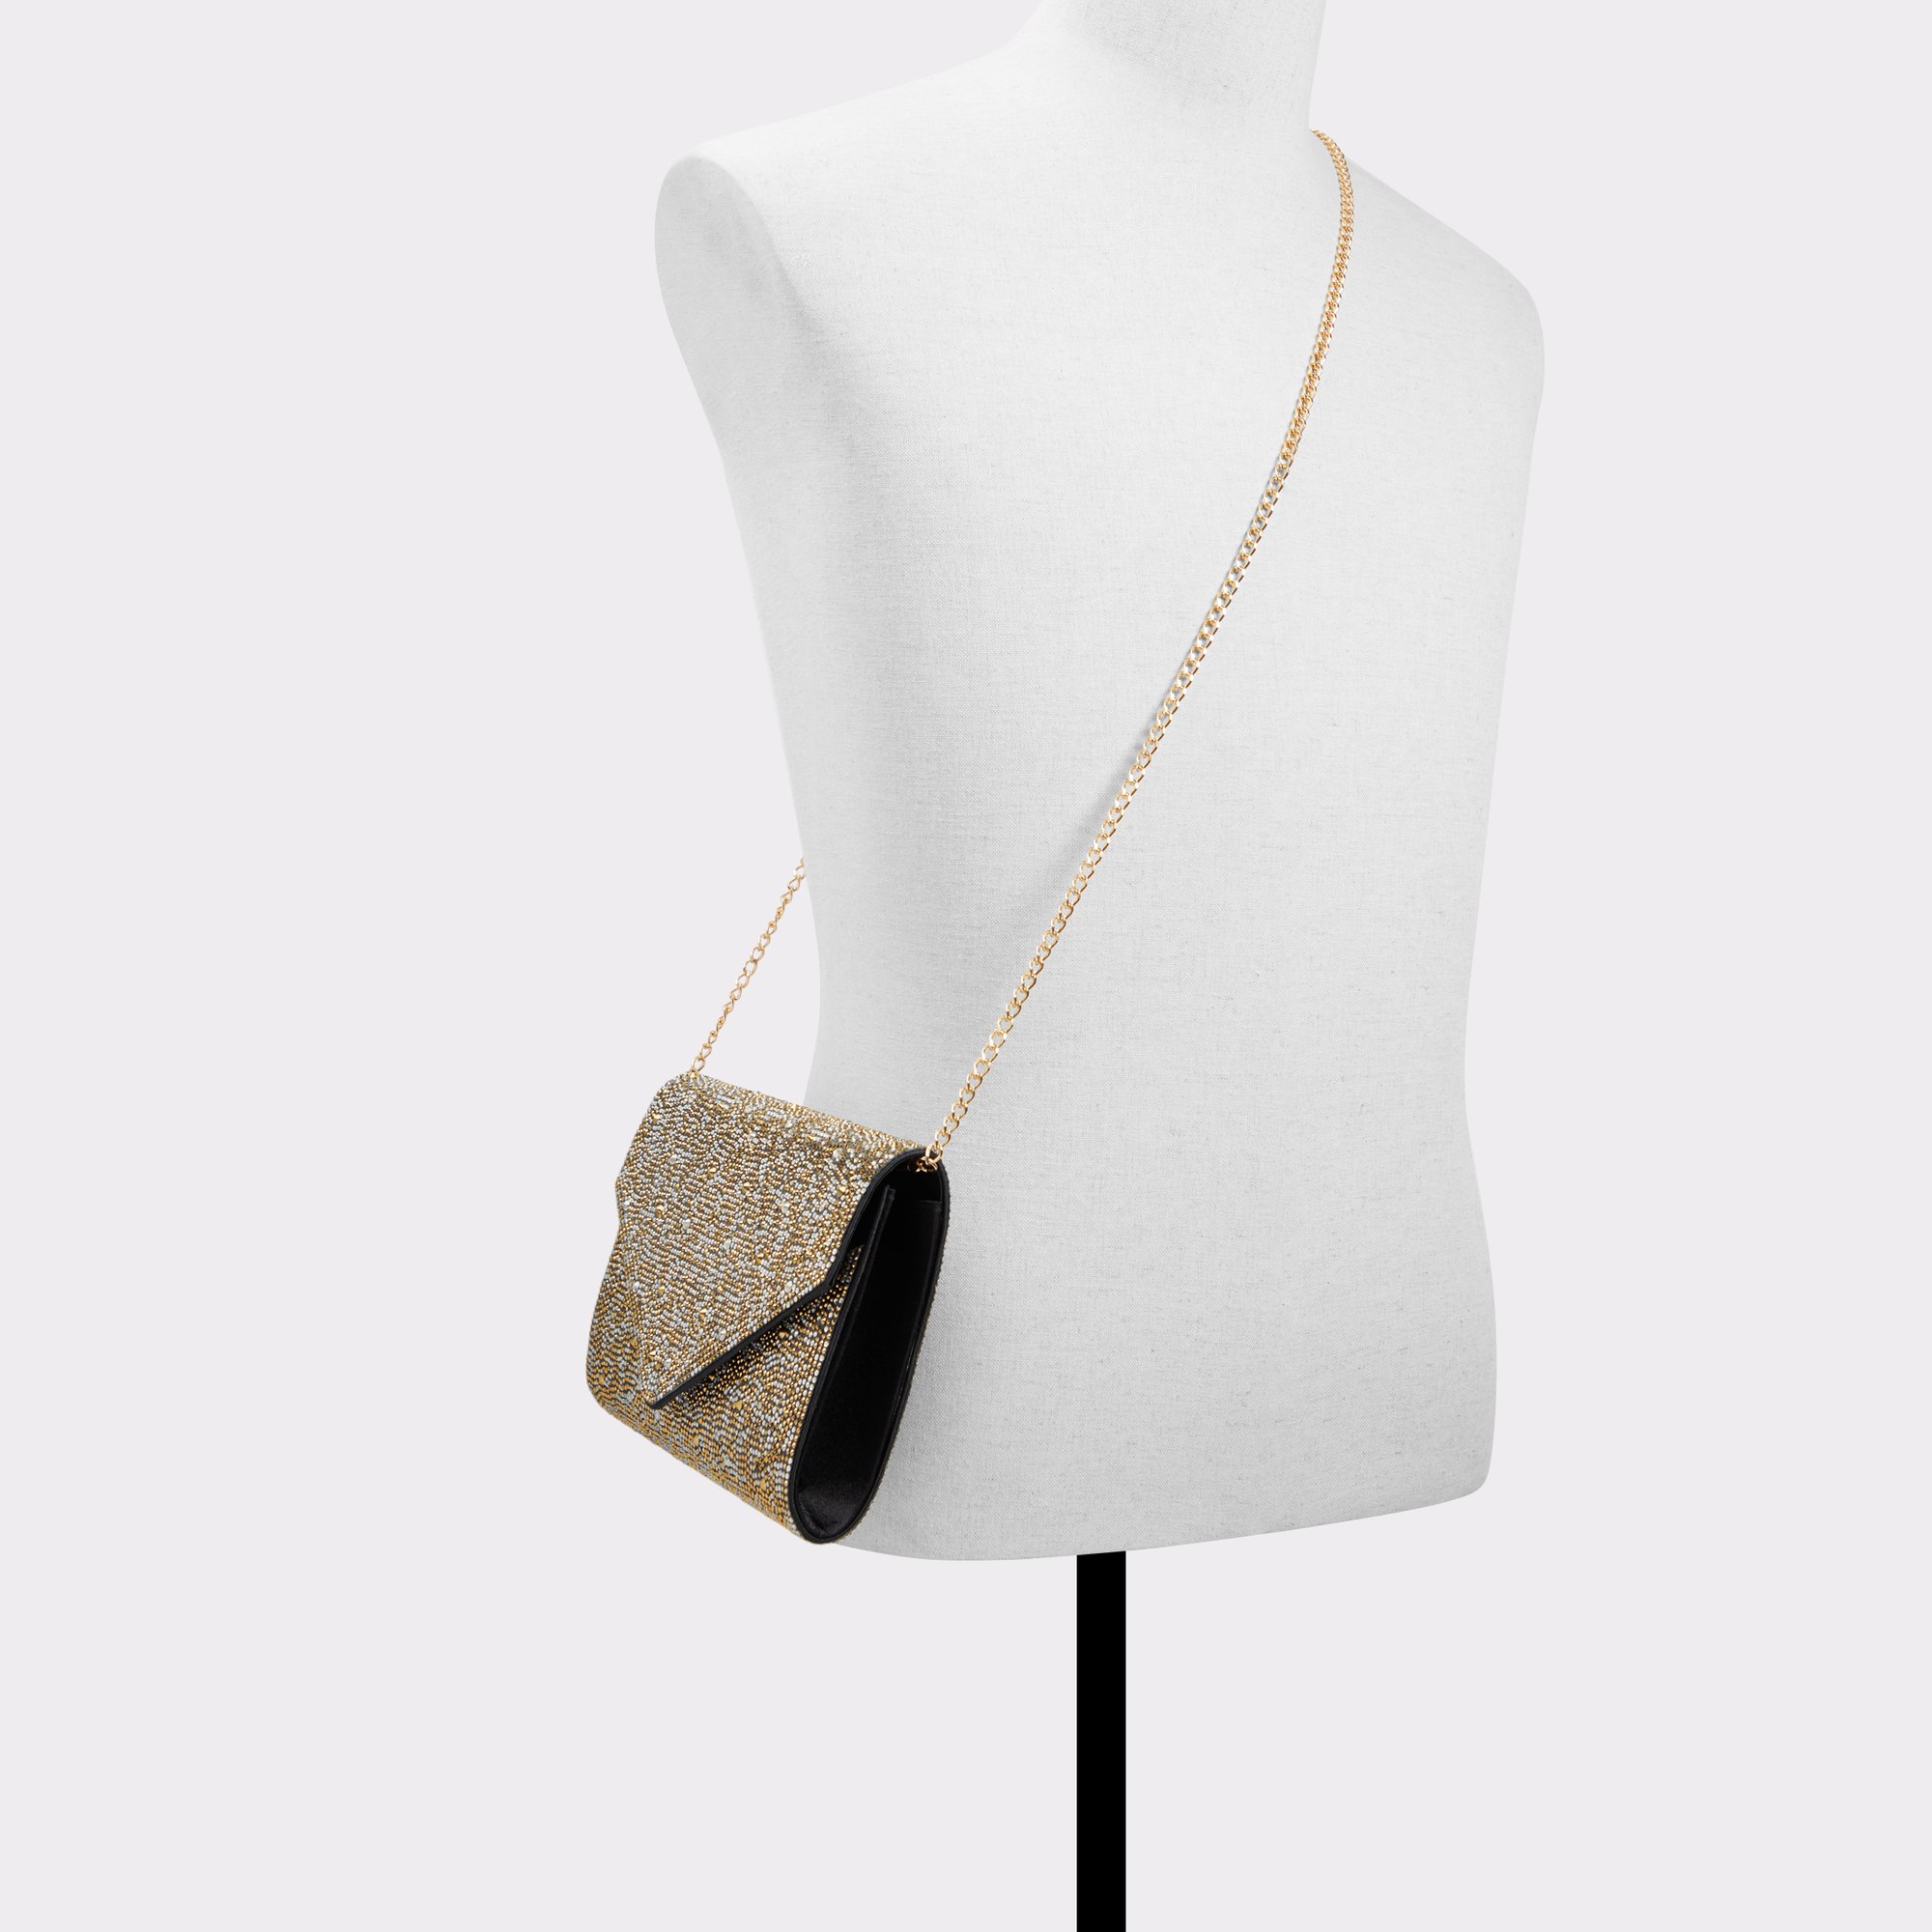 Geaven Black/Gold Multi Women's Clutches & Evening bags | ALDO Canada